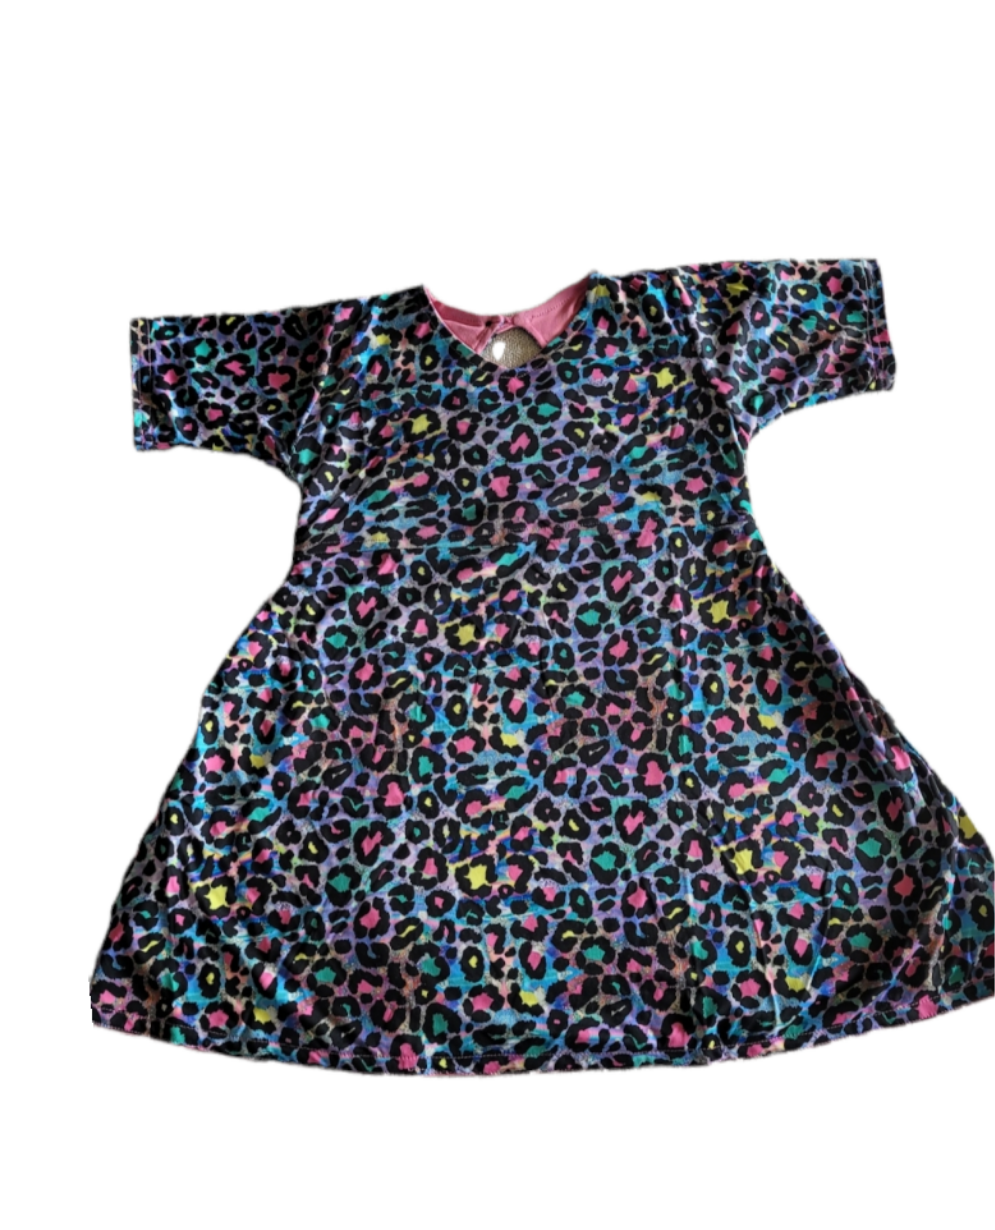 AVA's Pink Leopard Reversible Dress